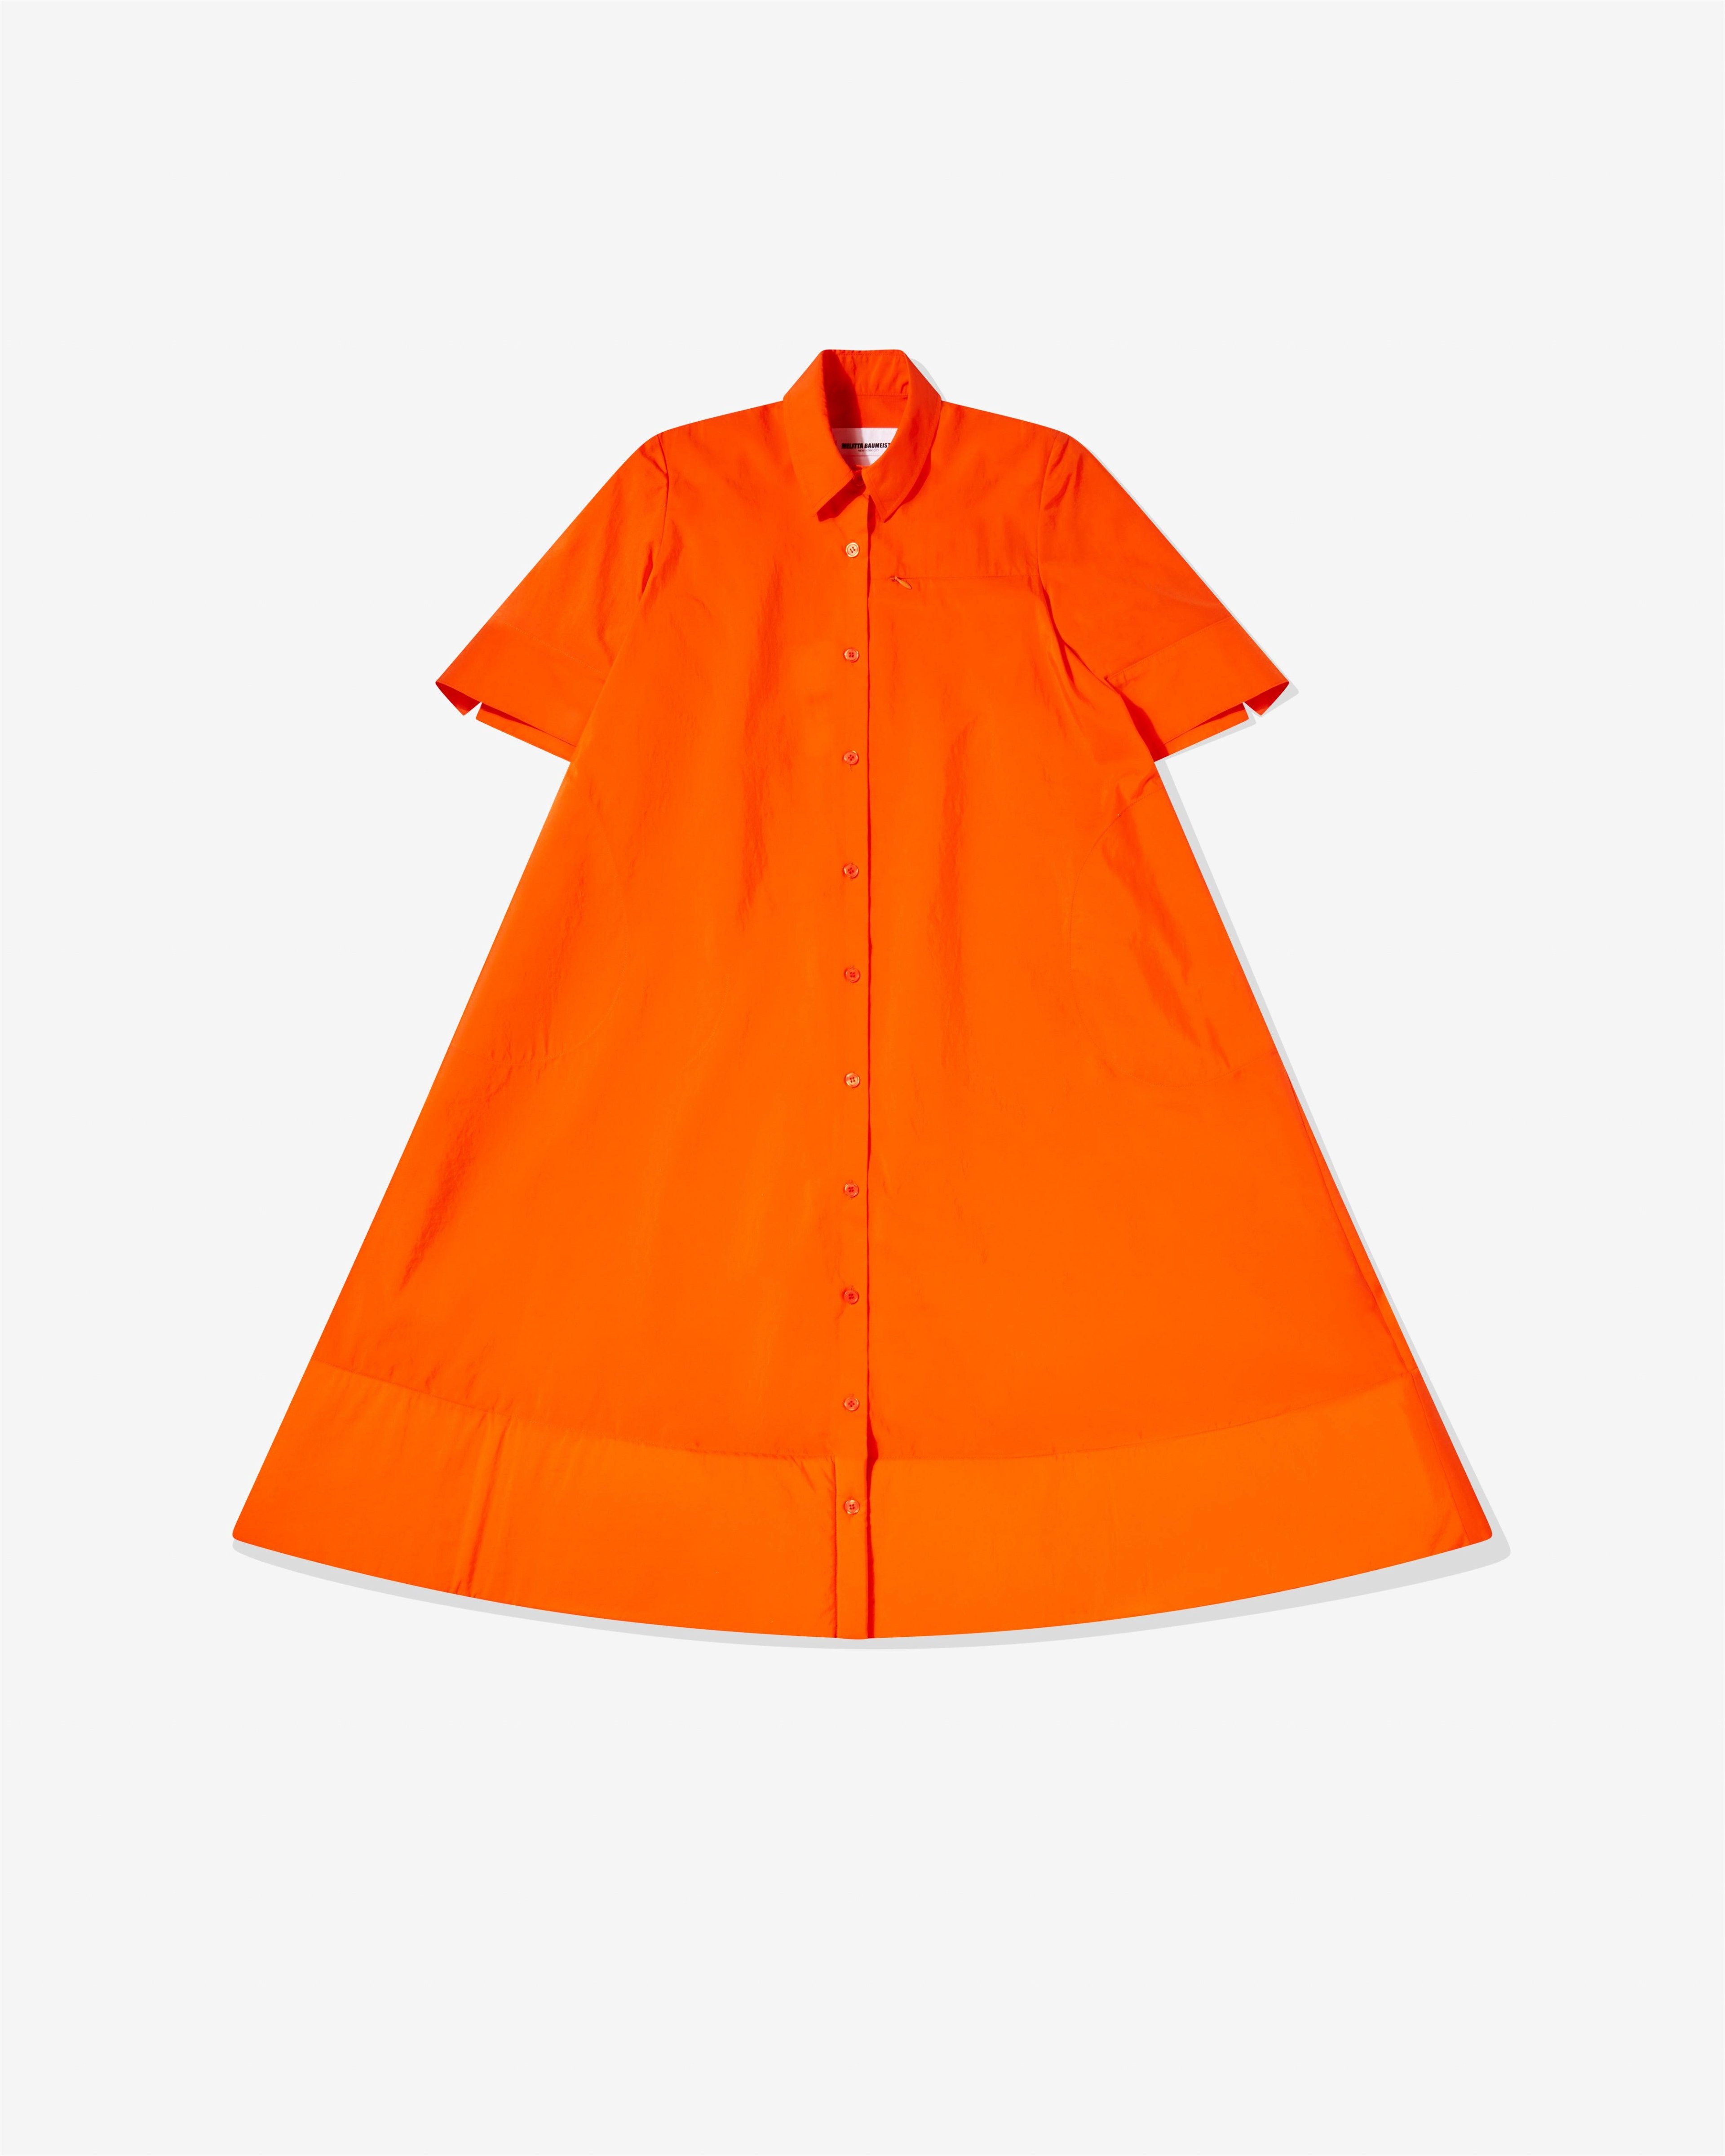 Melitta Baumeister - Women's Foam Bottom Shirt Dress - (Orange) by MELITTA BAUMEISTER